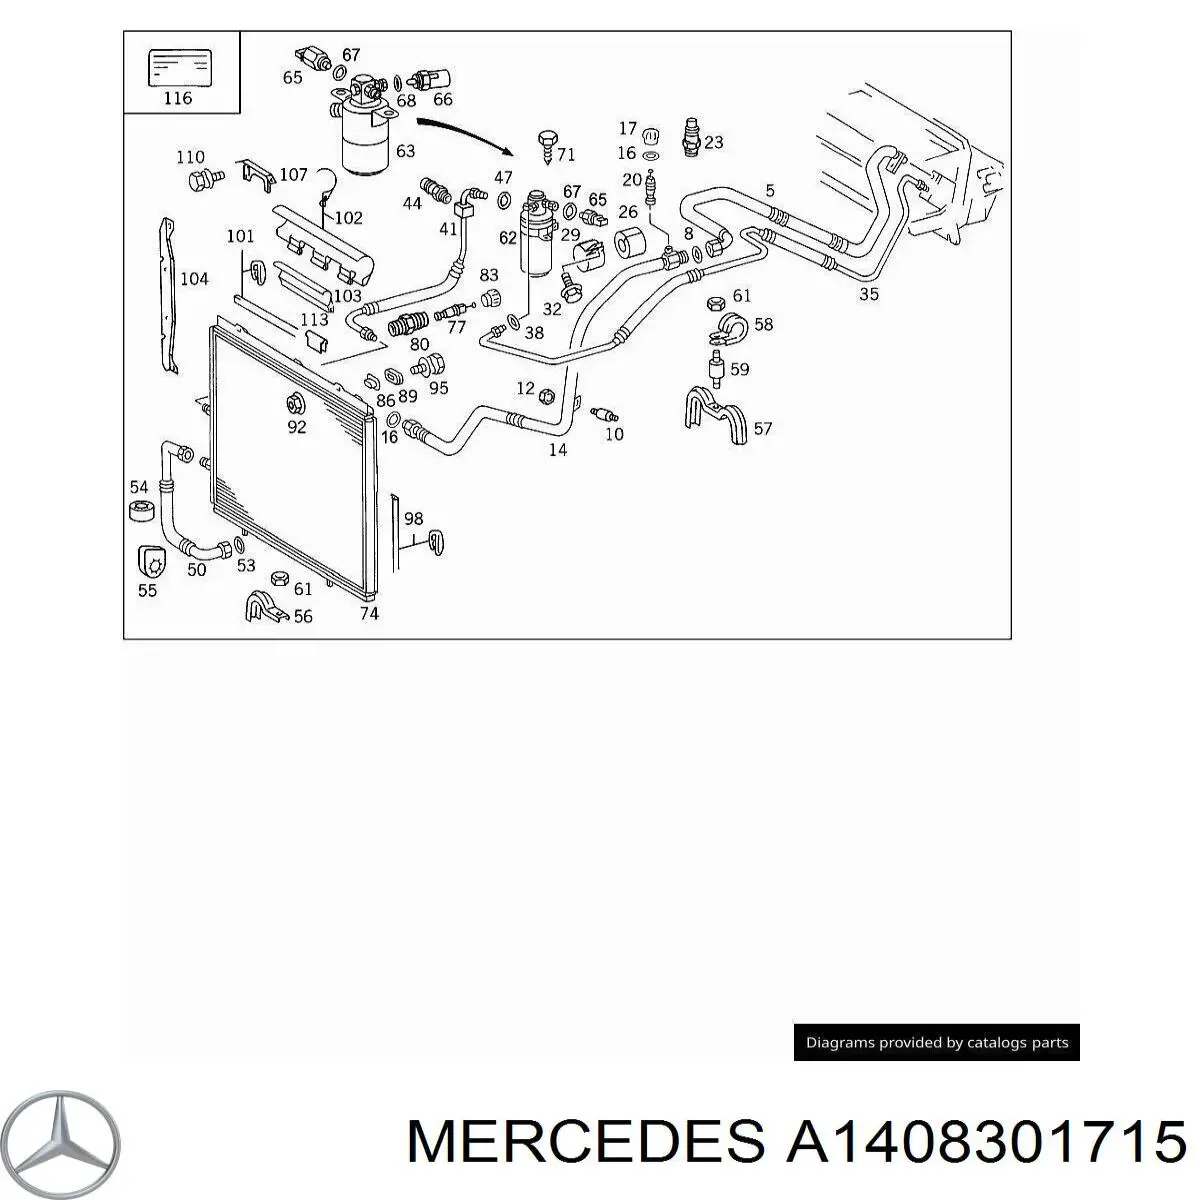 A1408301715 Mercedes 